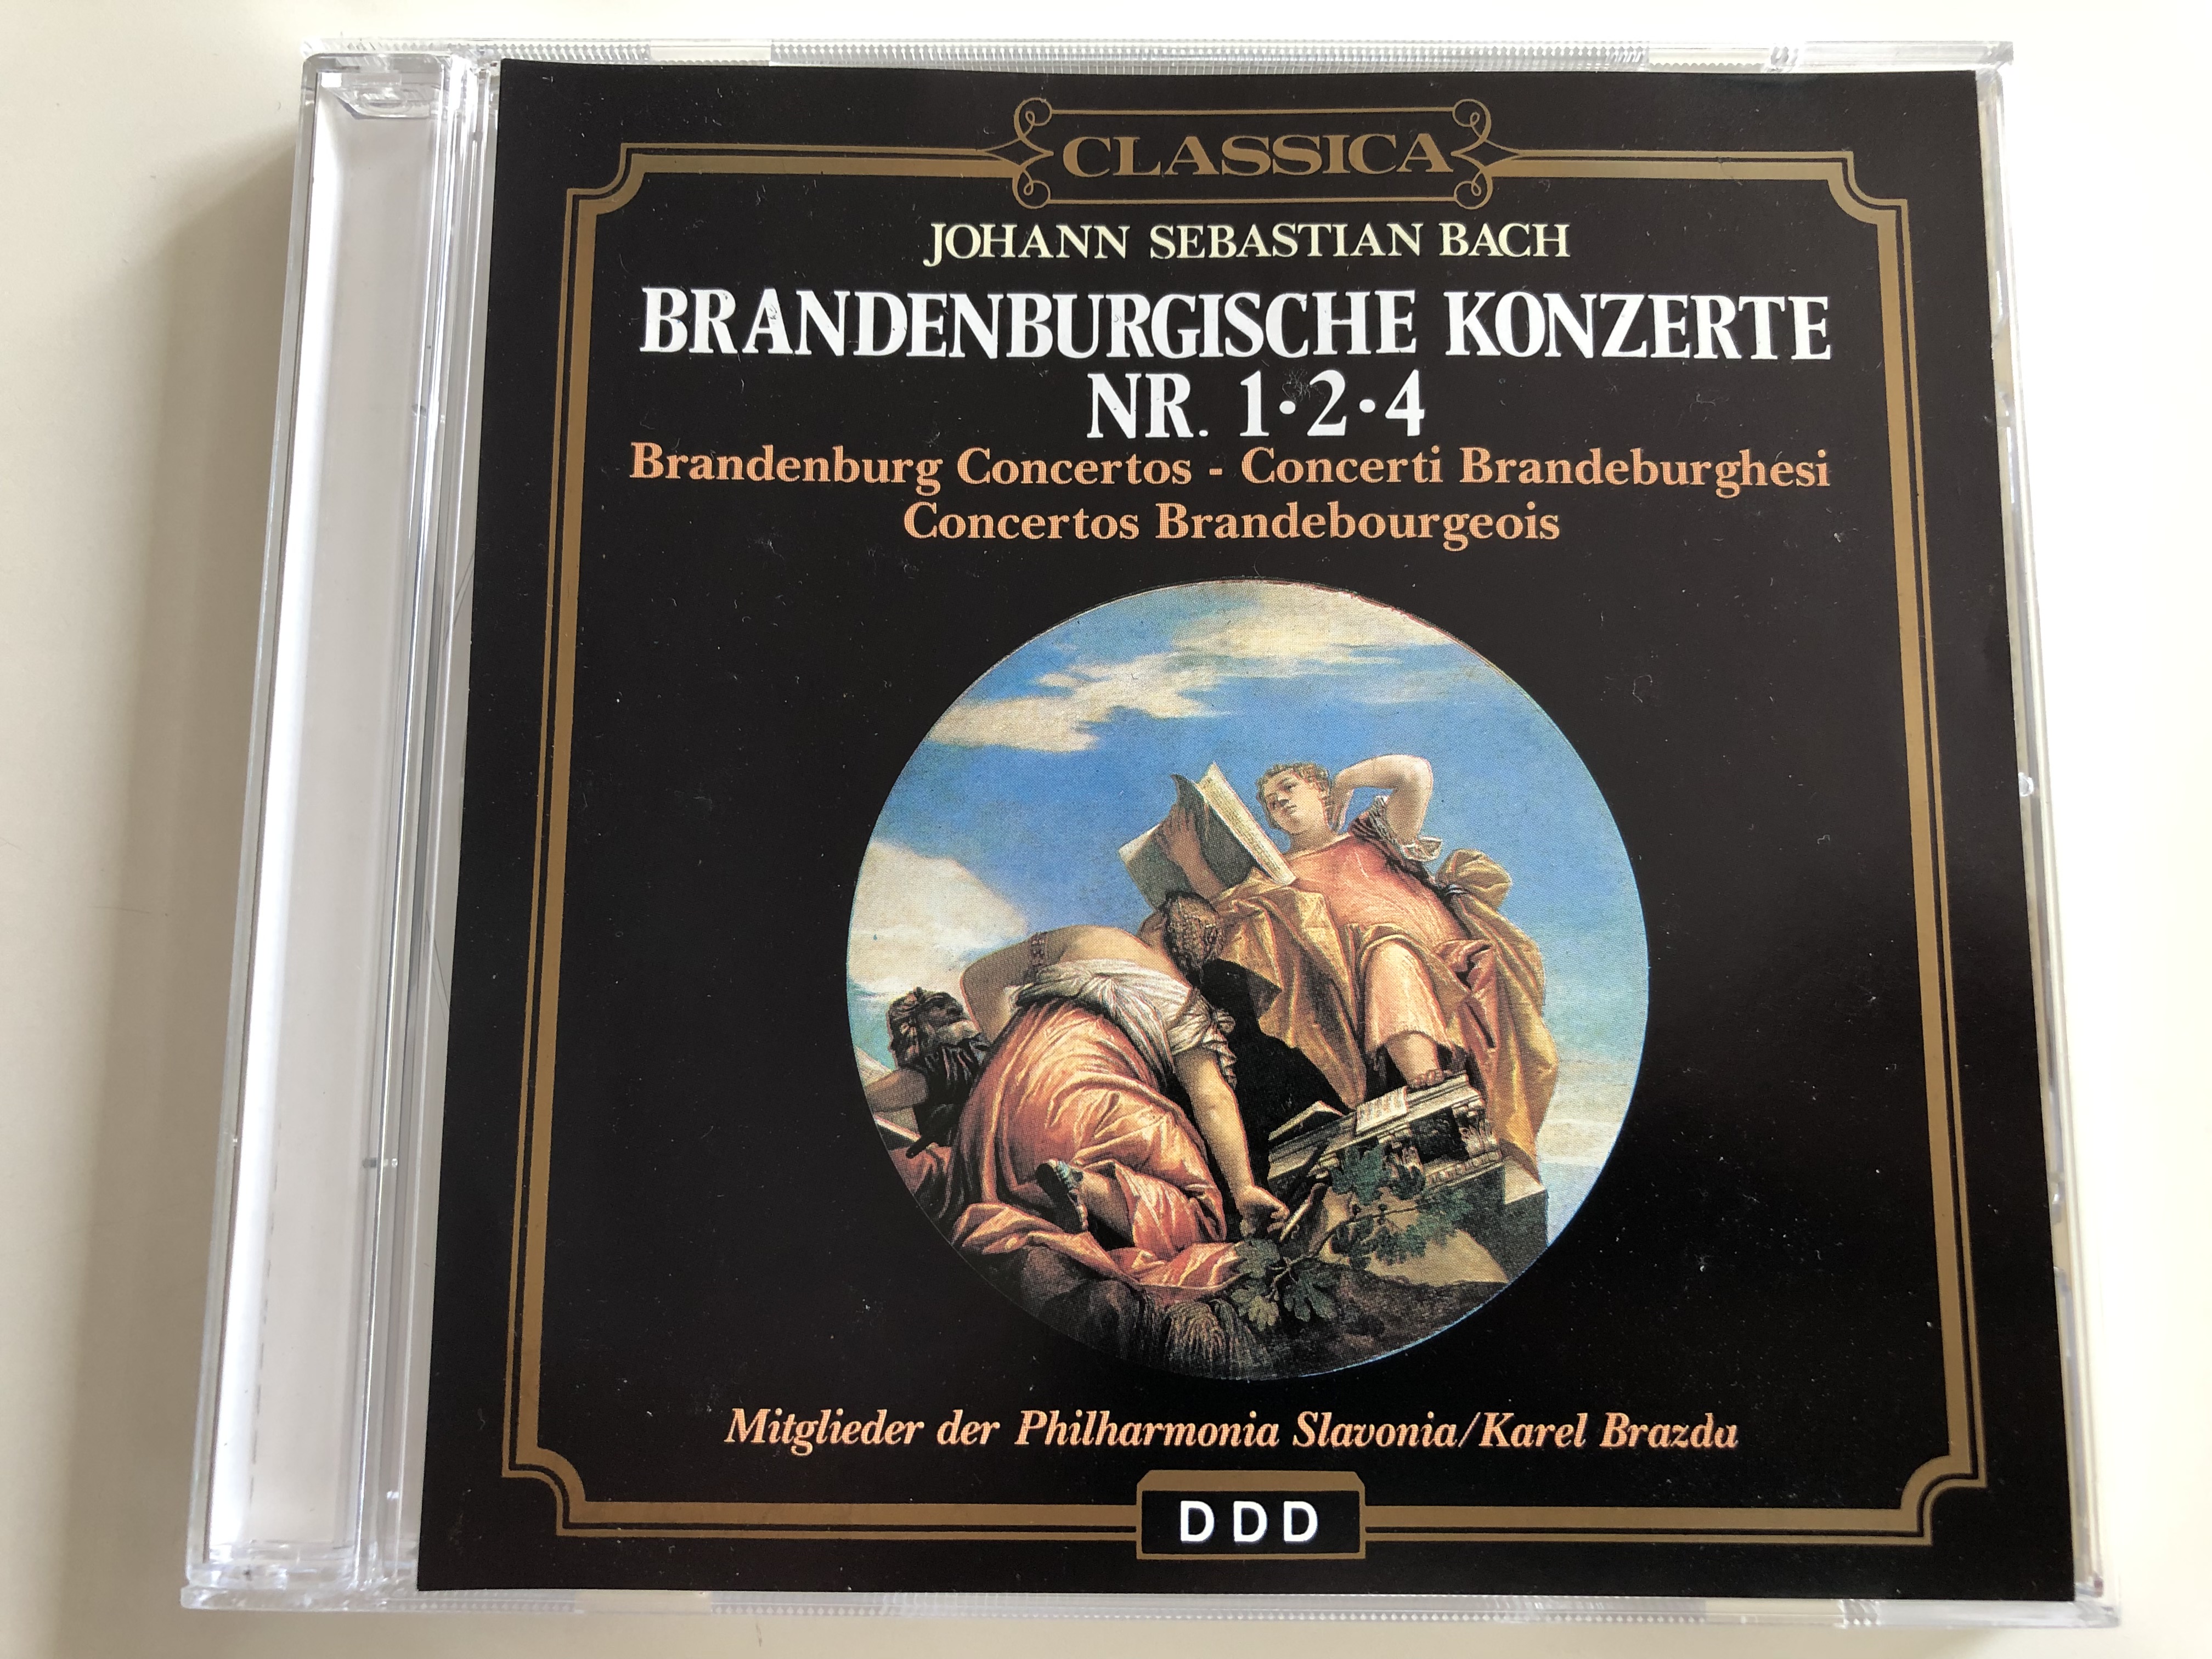 johann-sebastian-bach-brandenburgische-konzerte-nr.-1-2-4-mitglieder-der-philharmonia-slavonia-conducted-by-karel-brazda-audio-cd-1990-cd-55020-1-.jpg